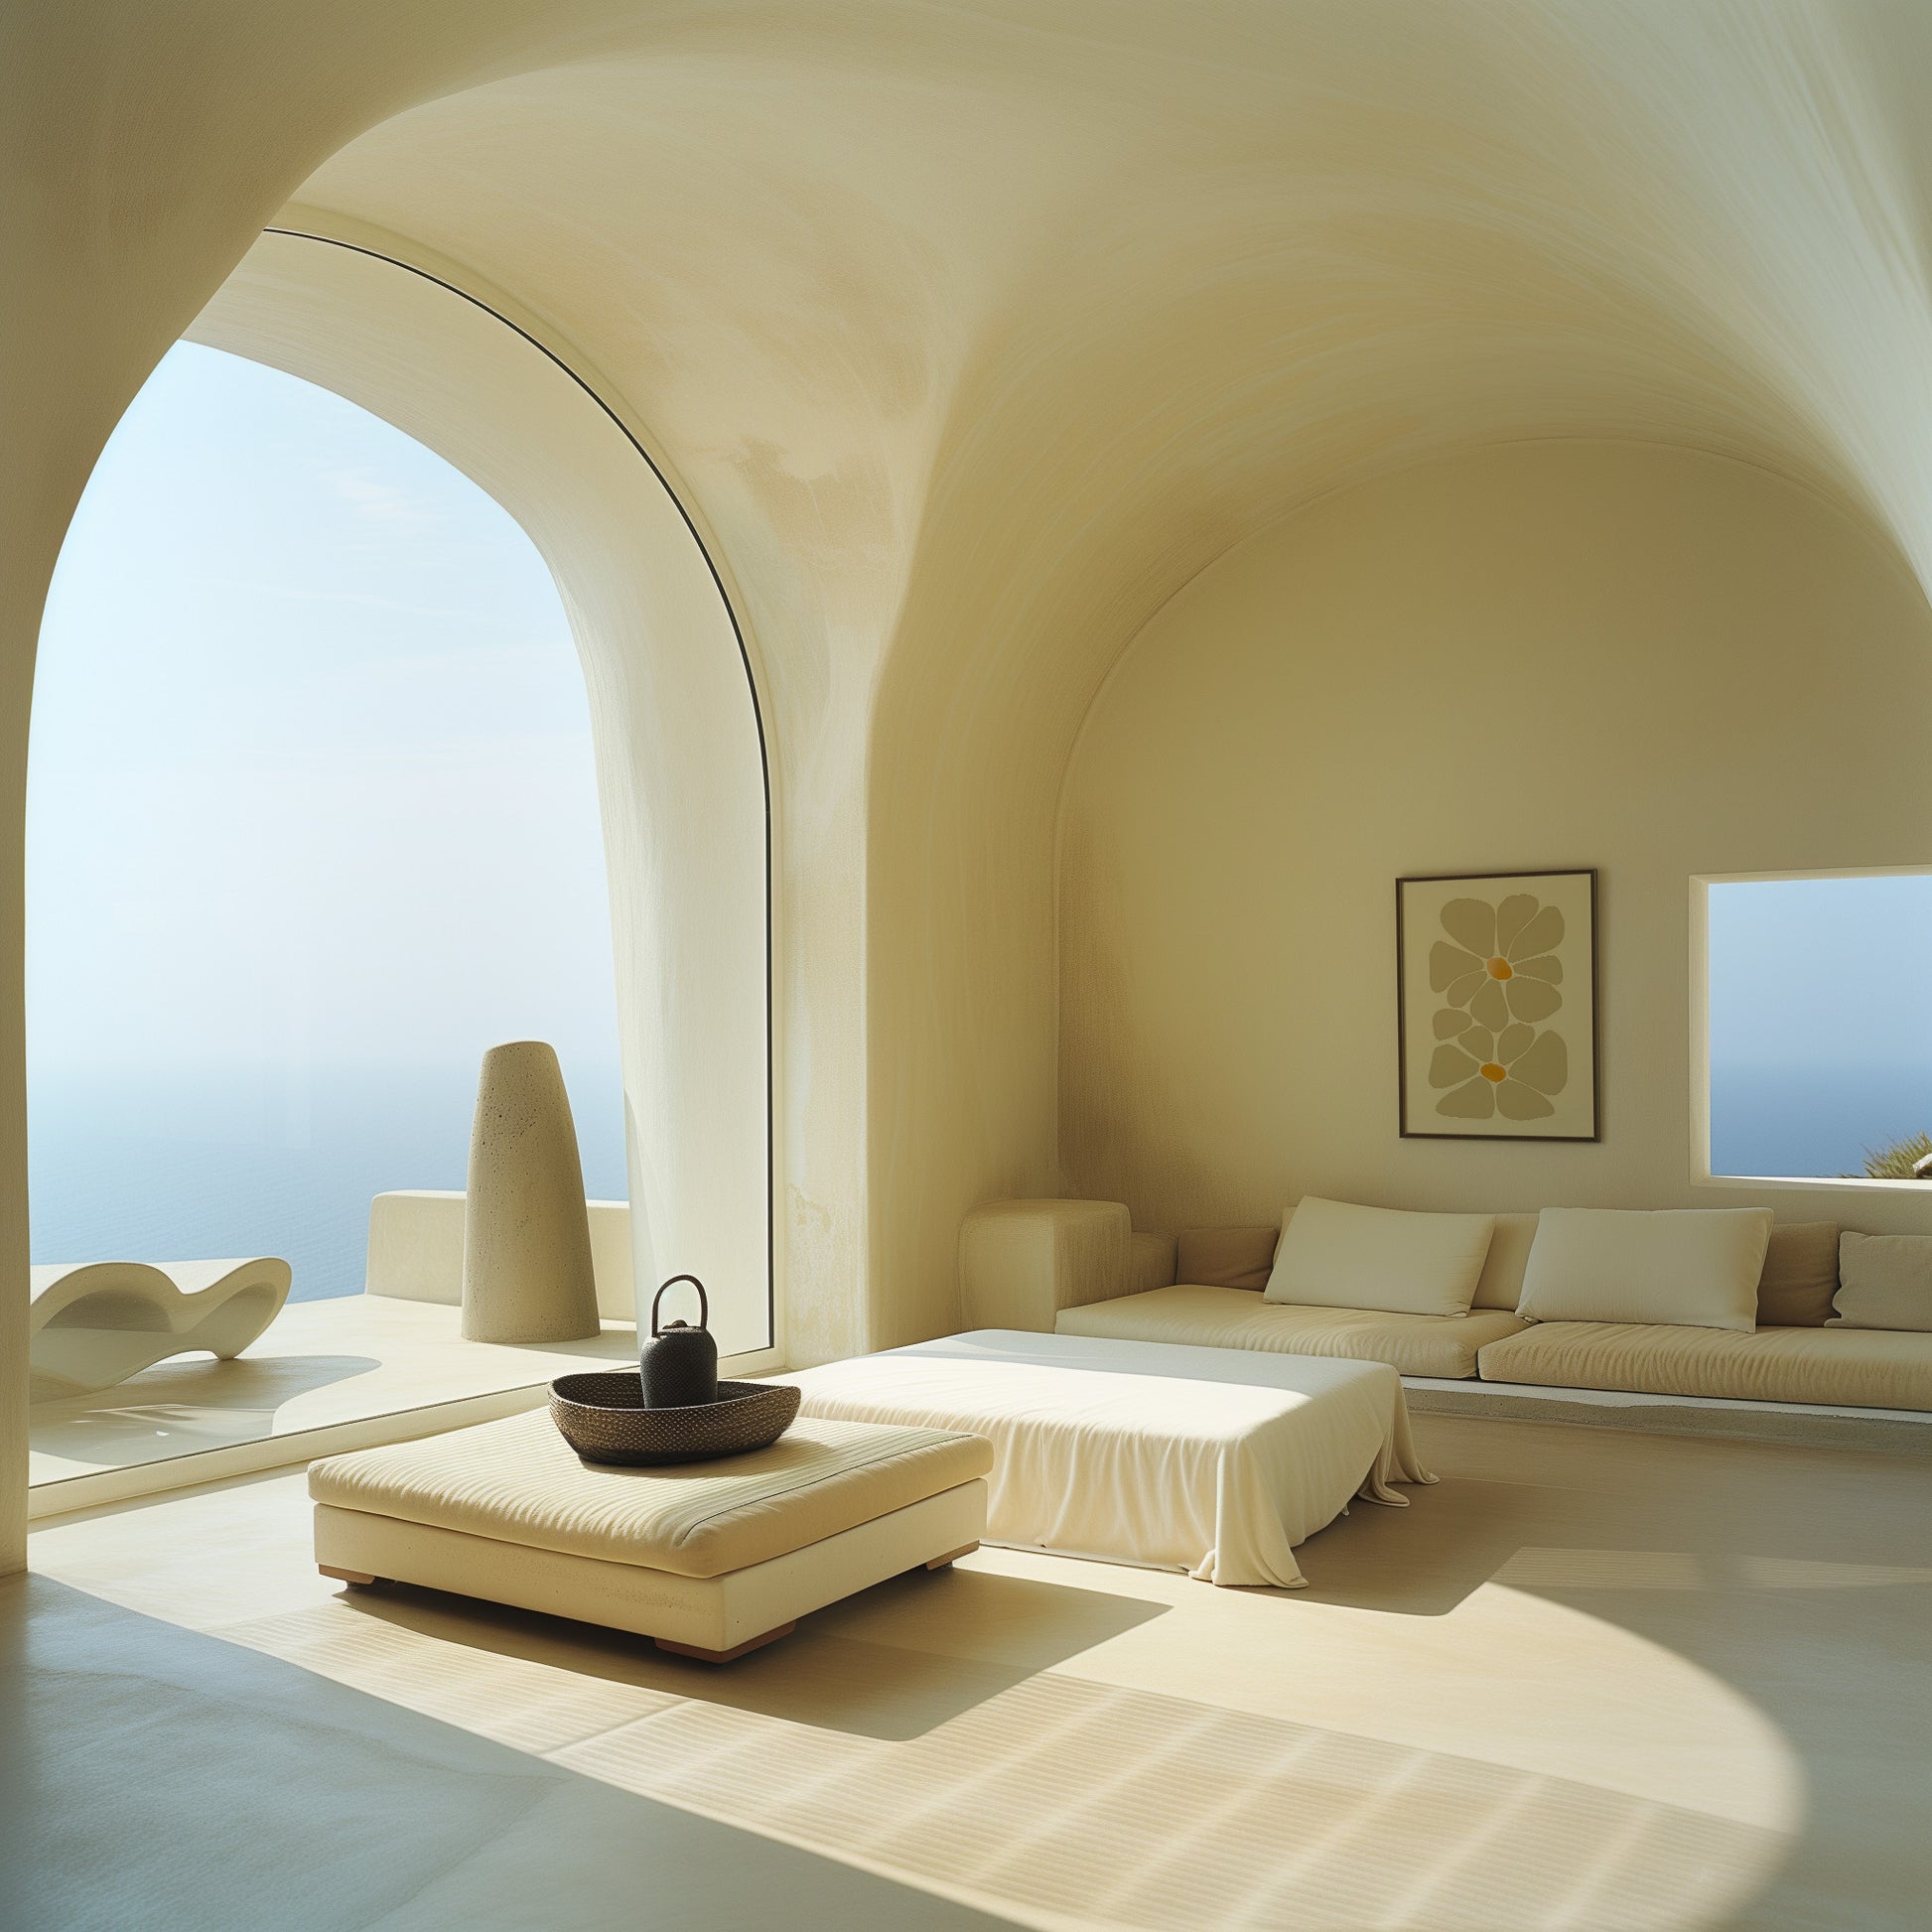 Minimalist interior design with arched window, beige tones, and sleek furniture.